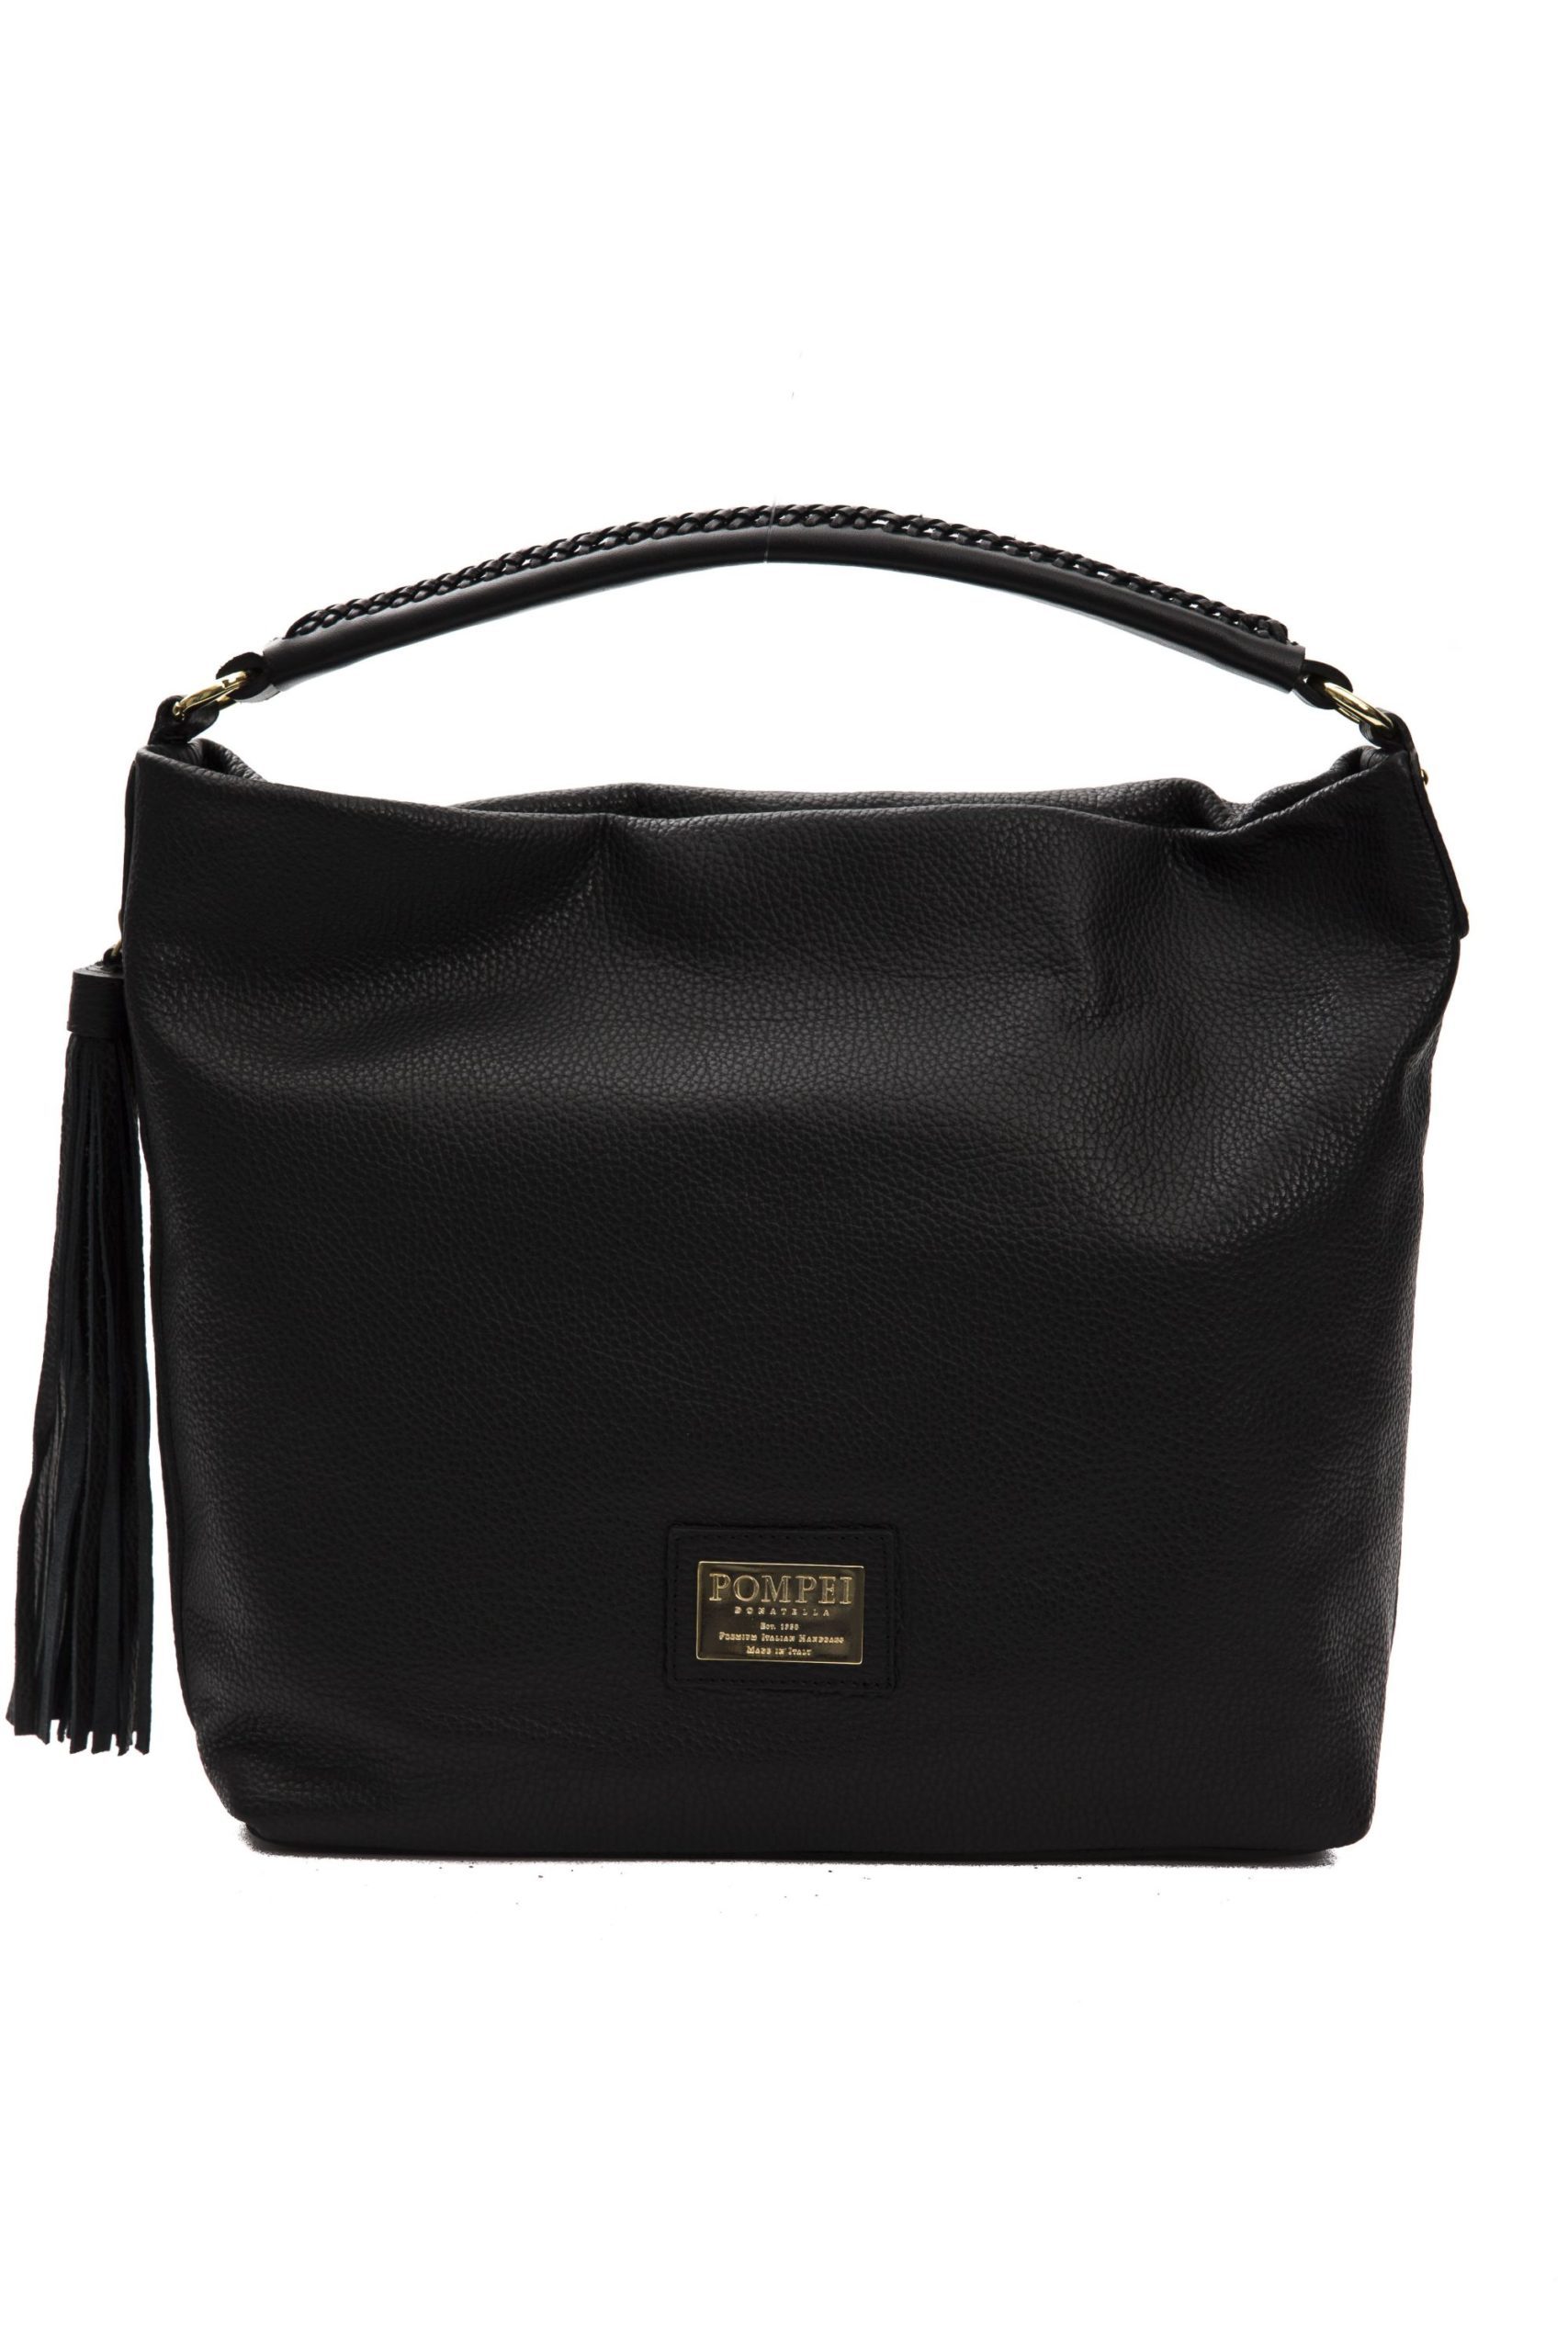 Pompei Donatella Women's Nero Shoulder Bag Black PO1005105